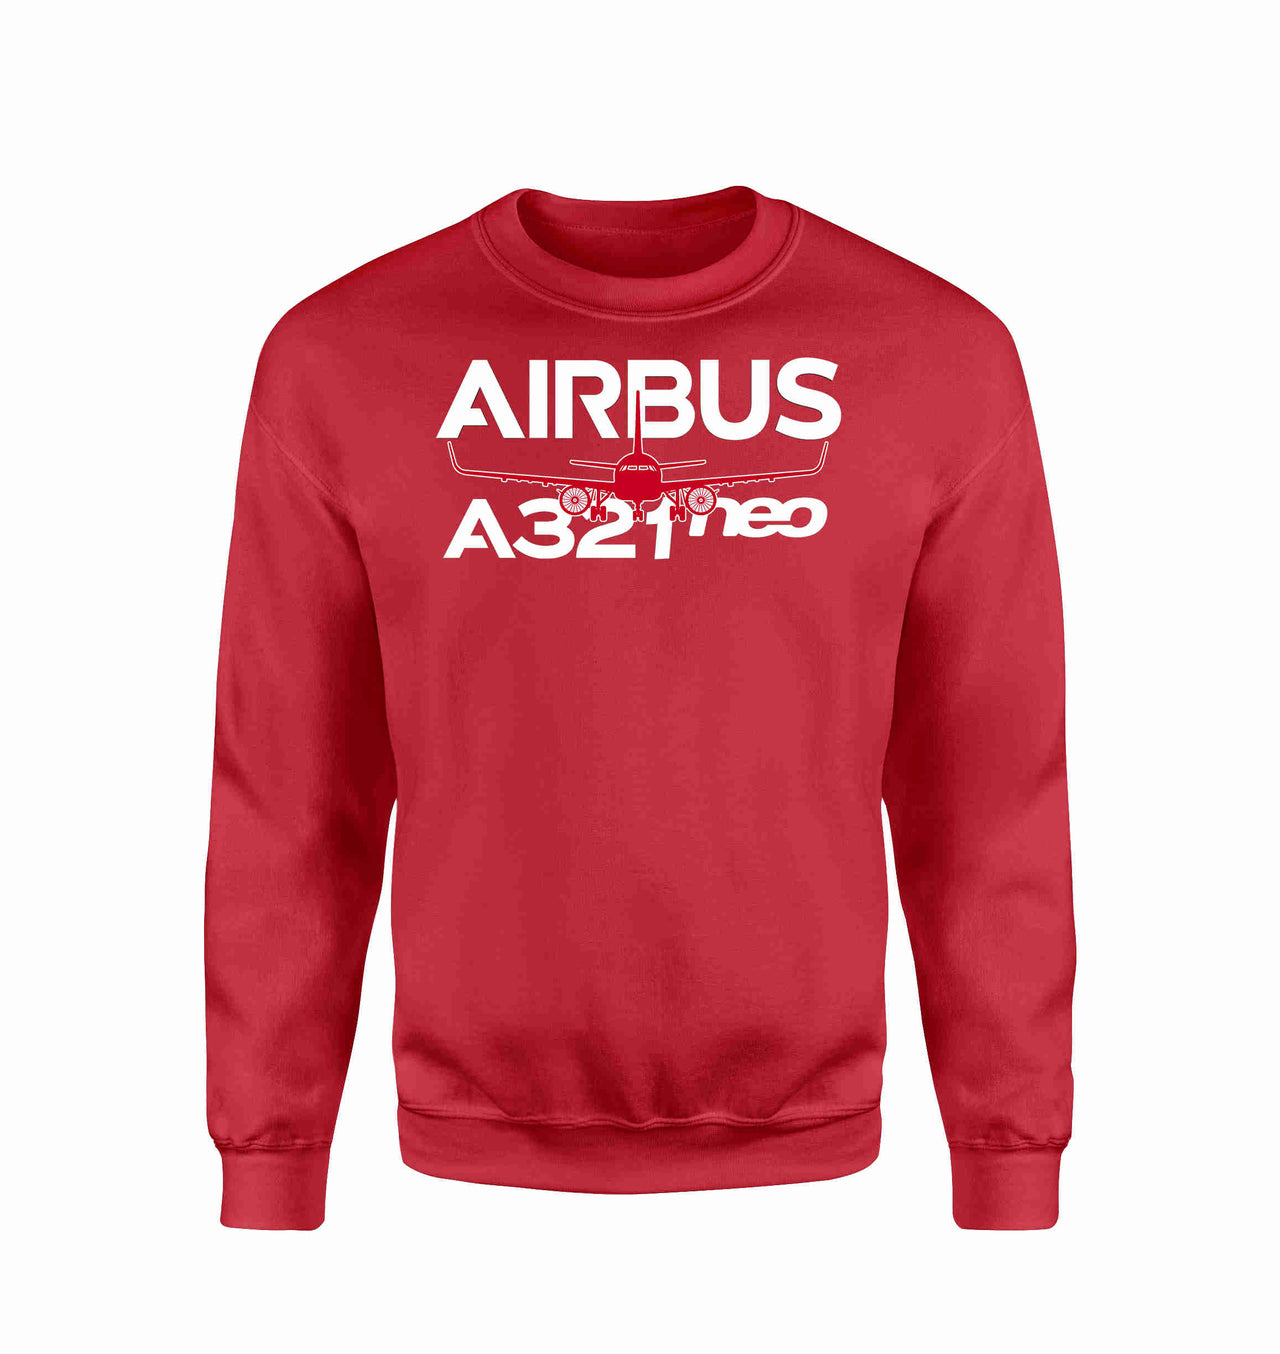 Amazing Airbus A321neo Designed Sweatshirts